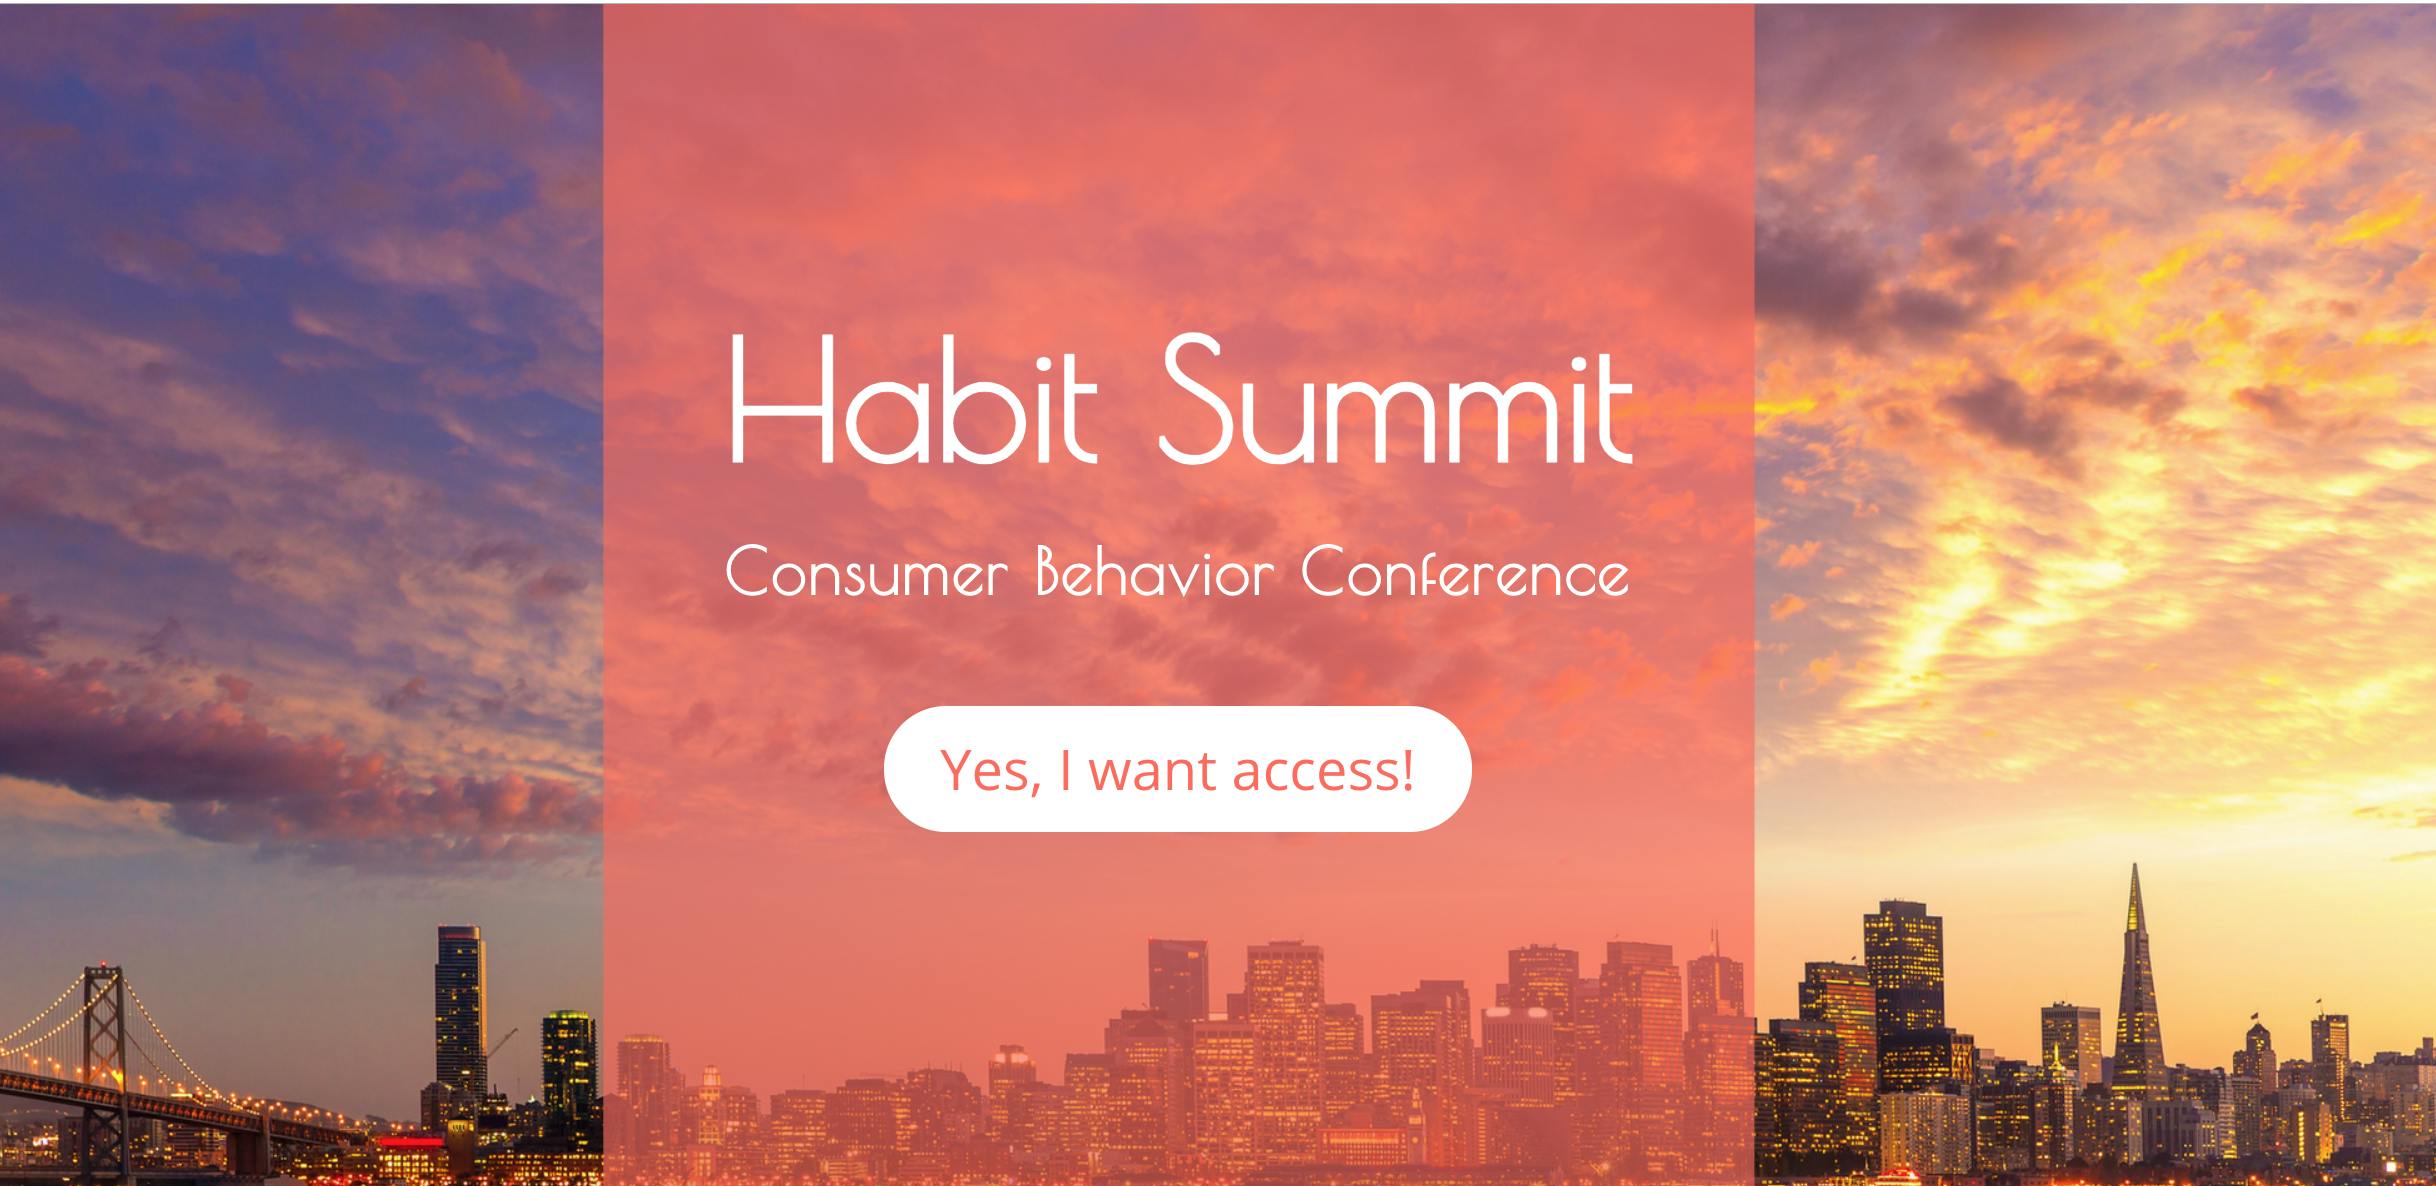 Habit Summit Behavioral Design Conference: Video Access